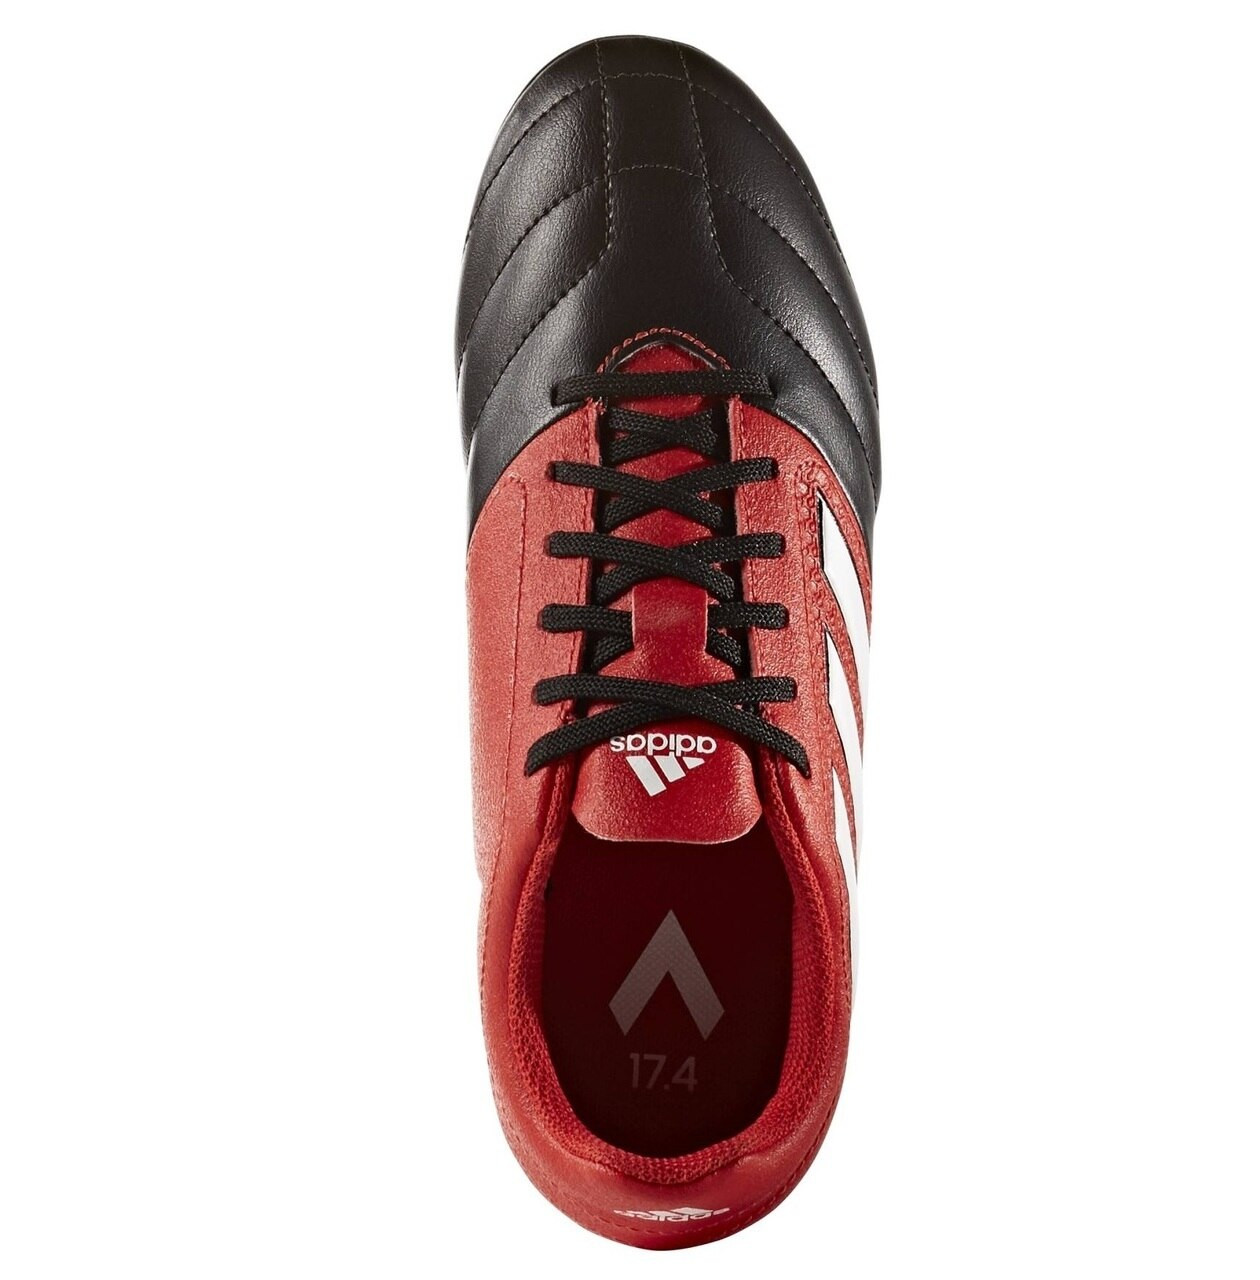 Adidas Ace 17.4 FxG Jr - Red/Core Black 